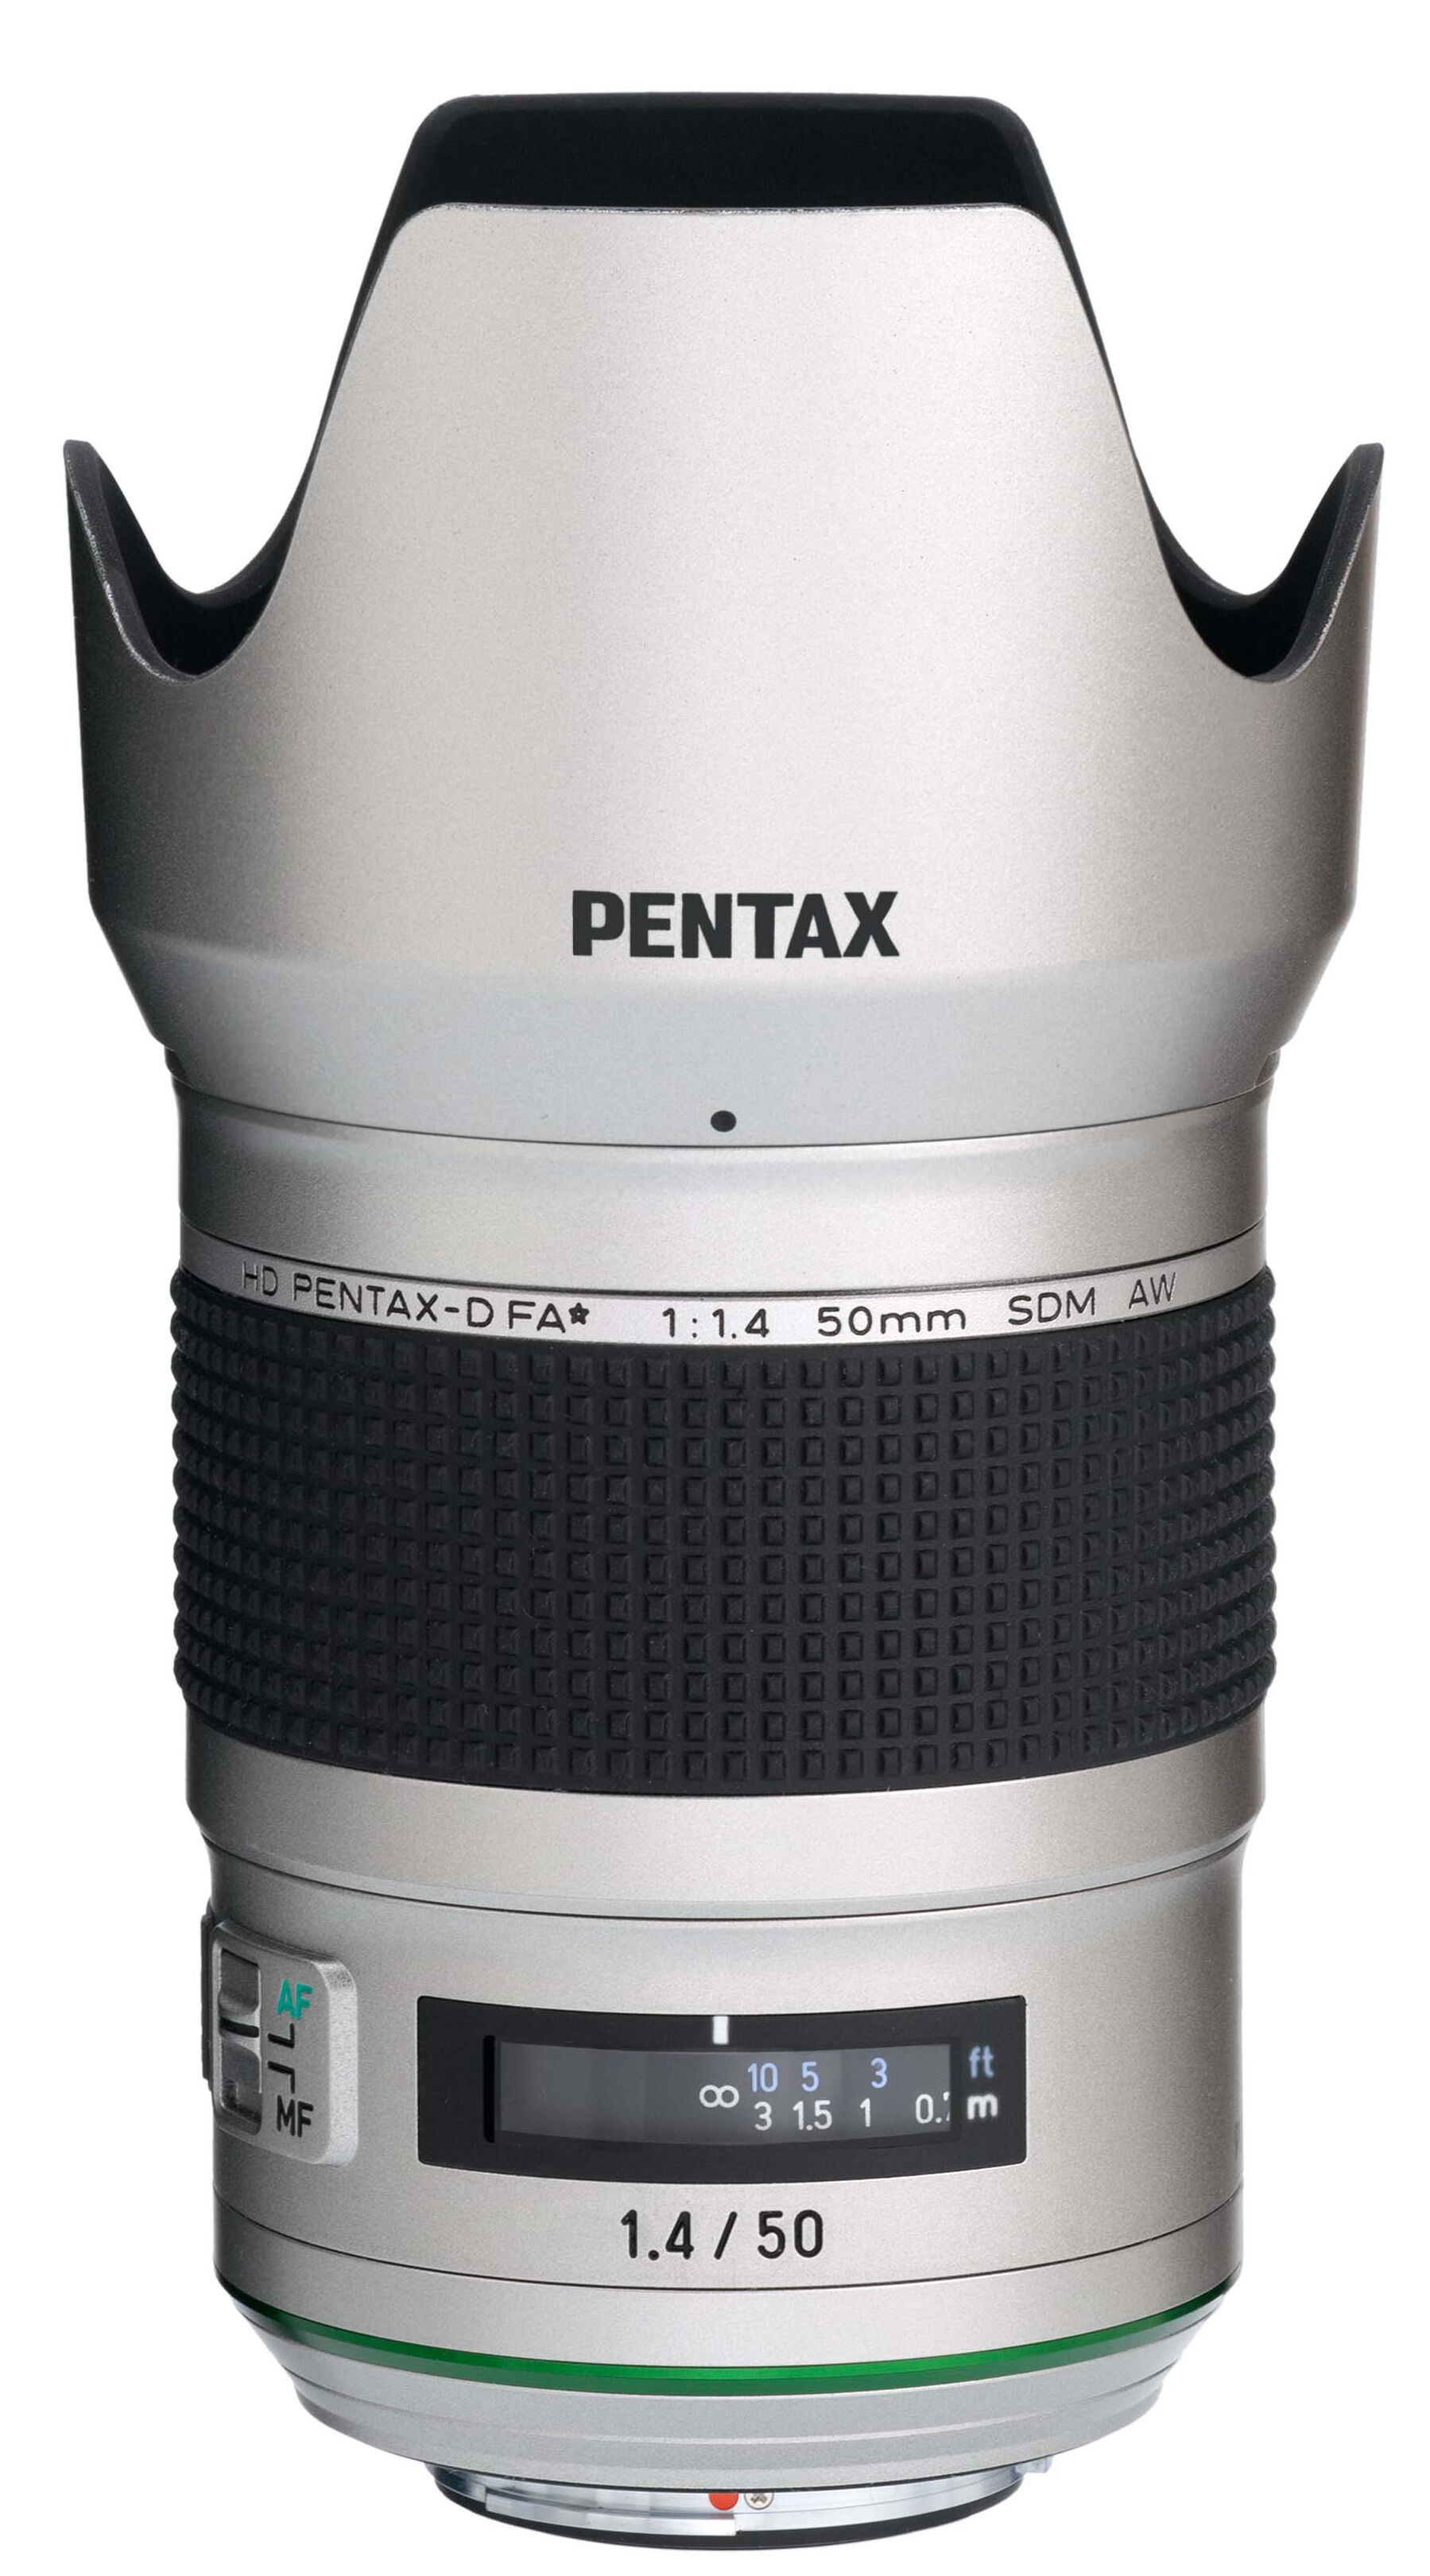 Pentax 50mm f/1.4 D HD FA SDM AW Silver